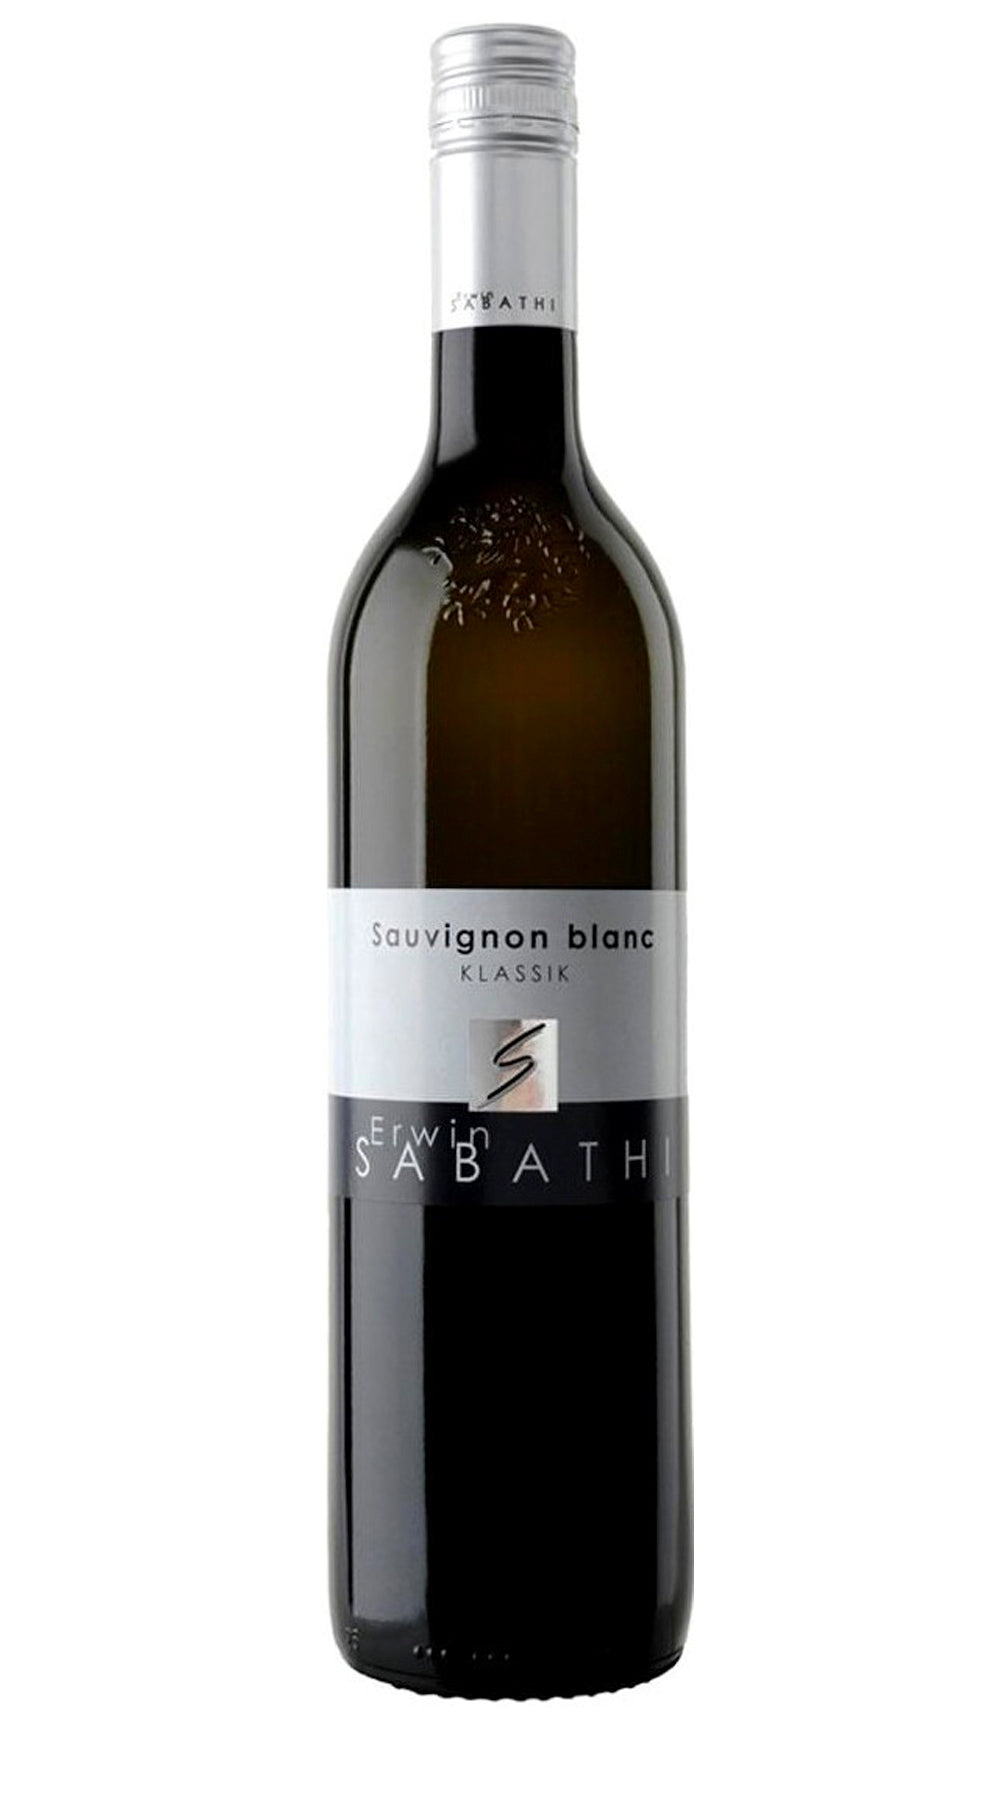 Sabathi Sauvignon Blanc Klassik